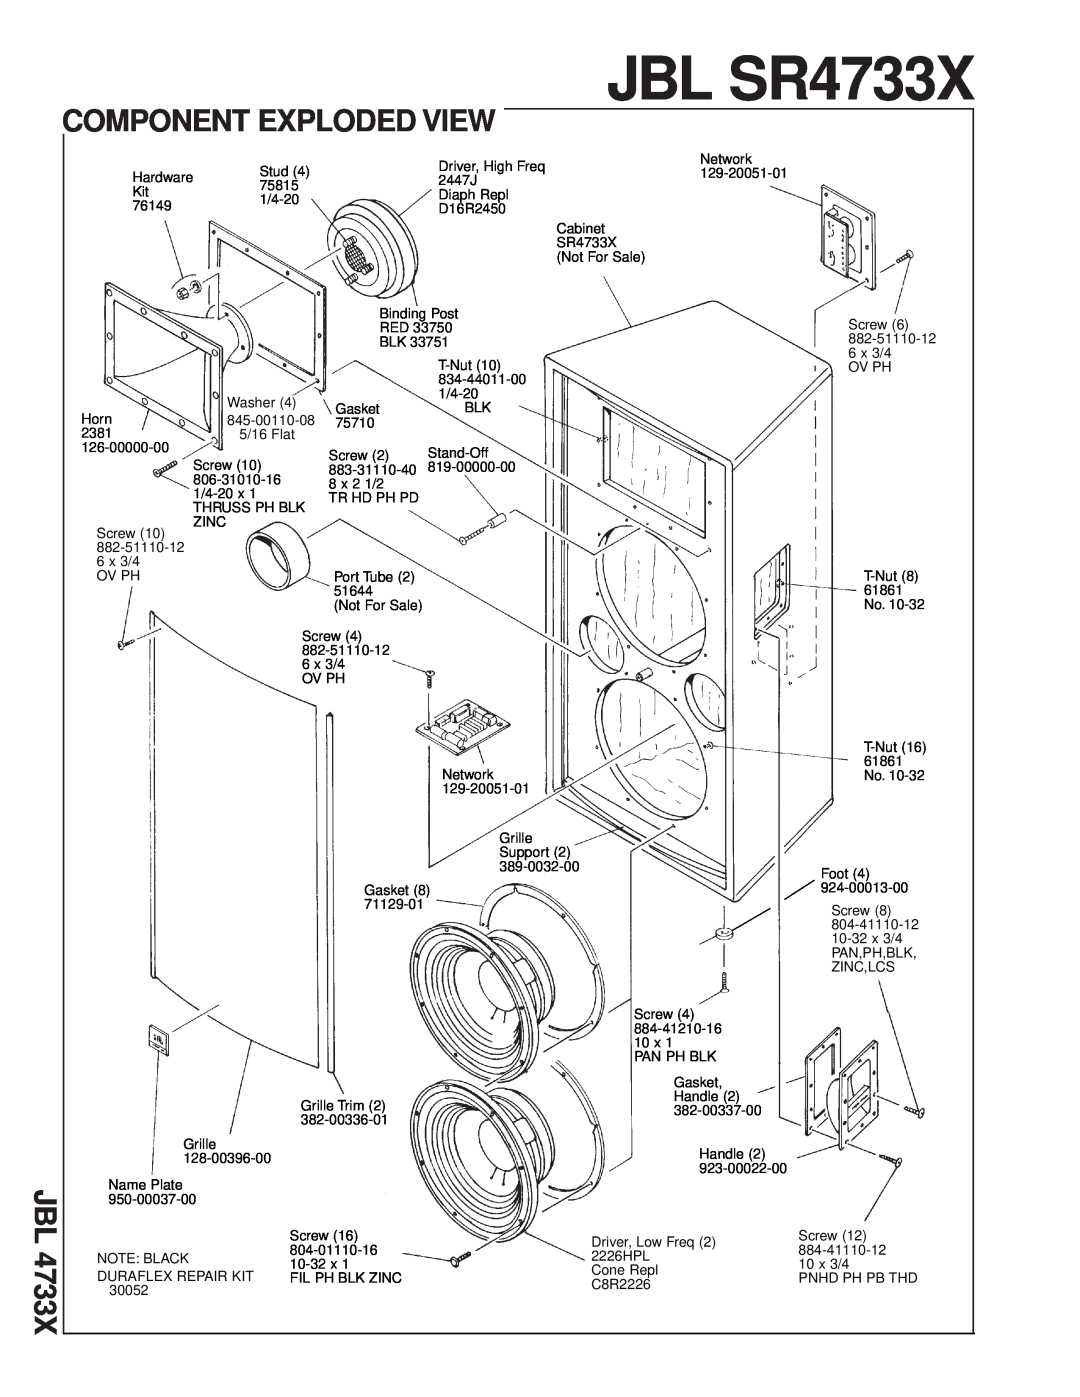 JBL technical manual JBL SR4733X, Component Exploded View 